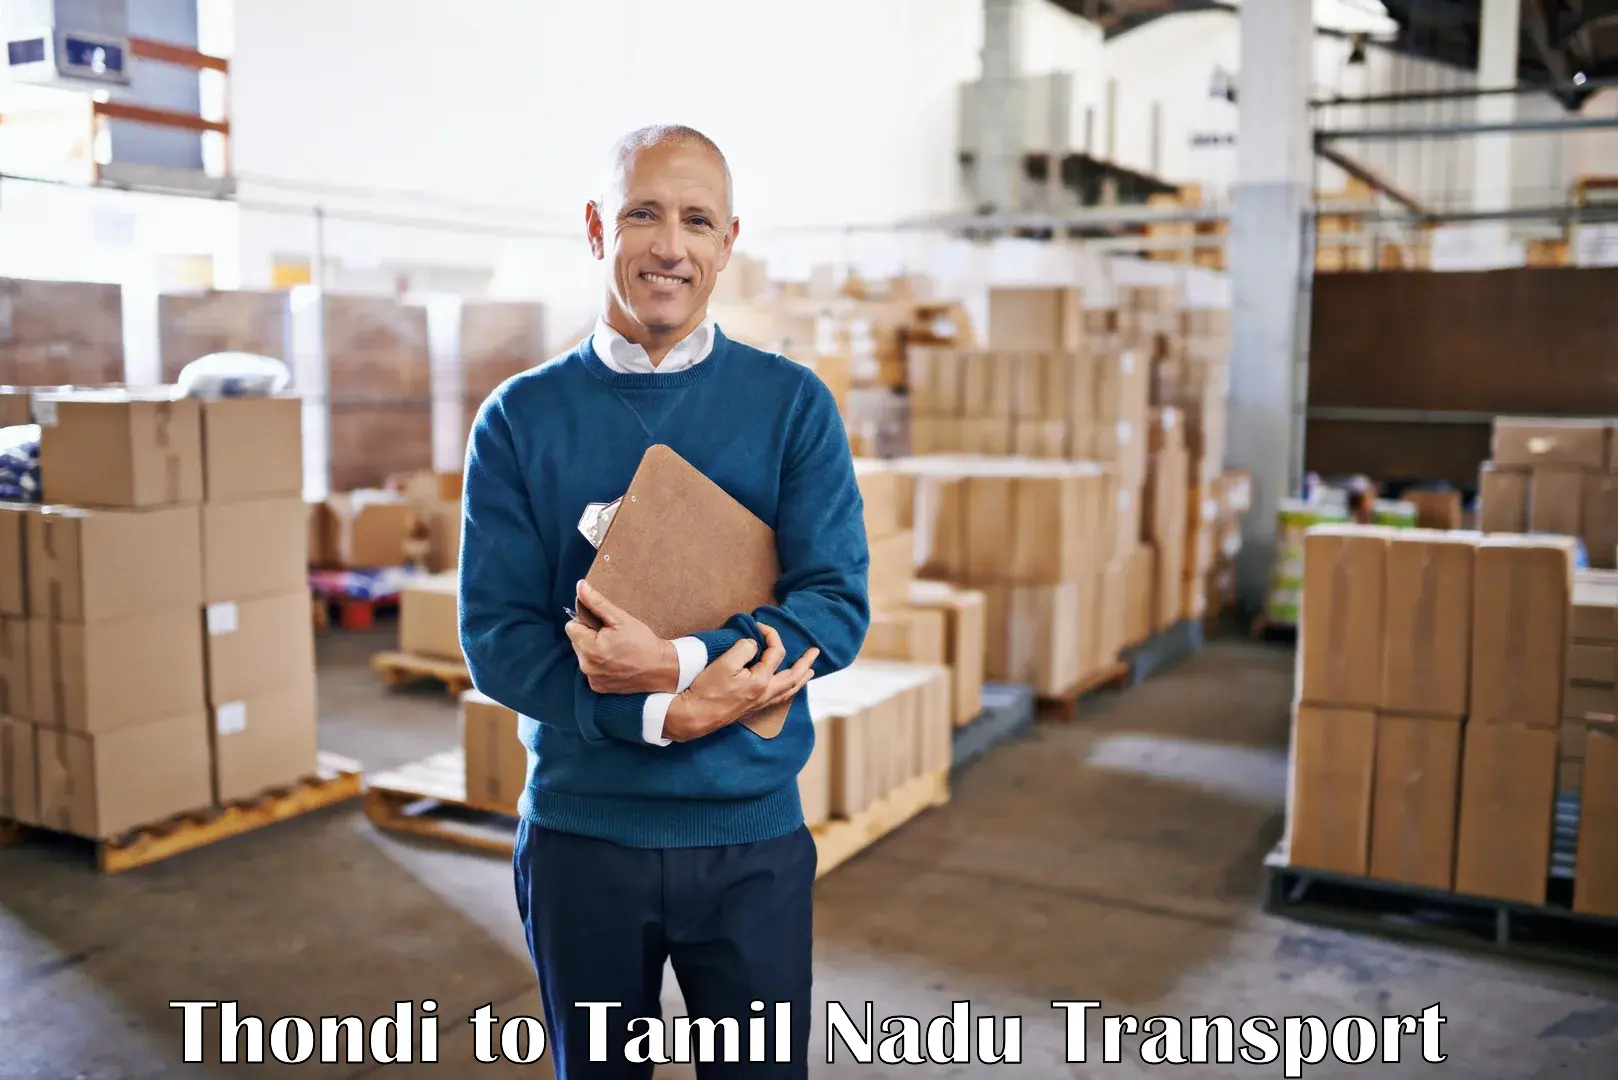 Bike shipping service Thondi to Tamil Nadu